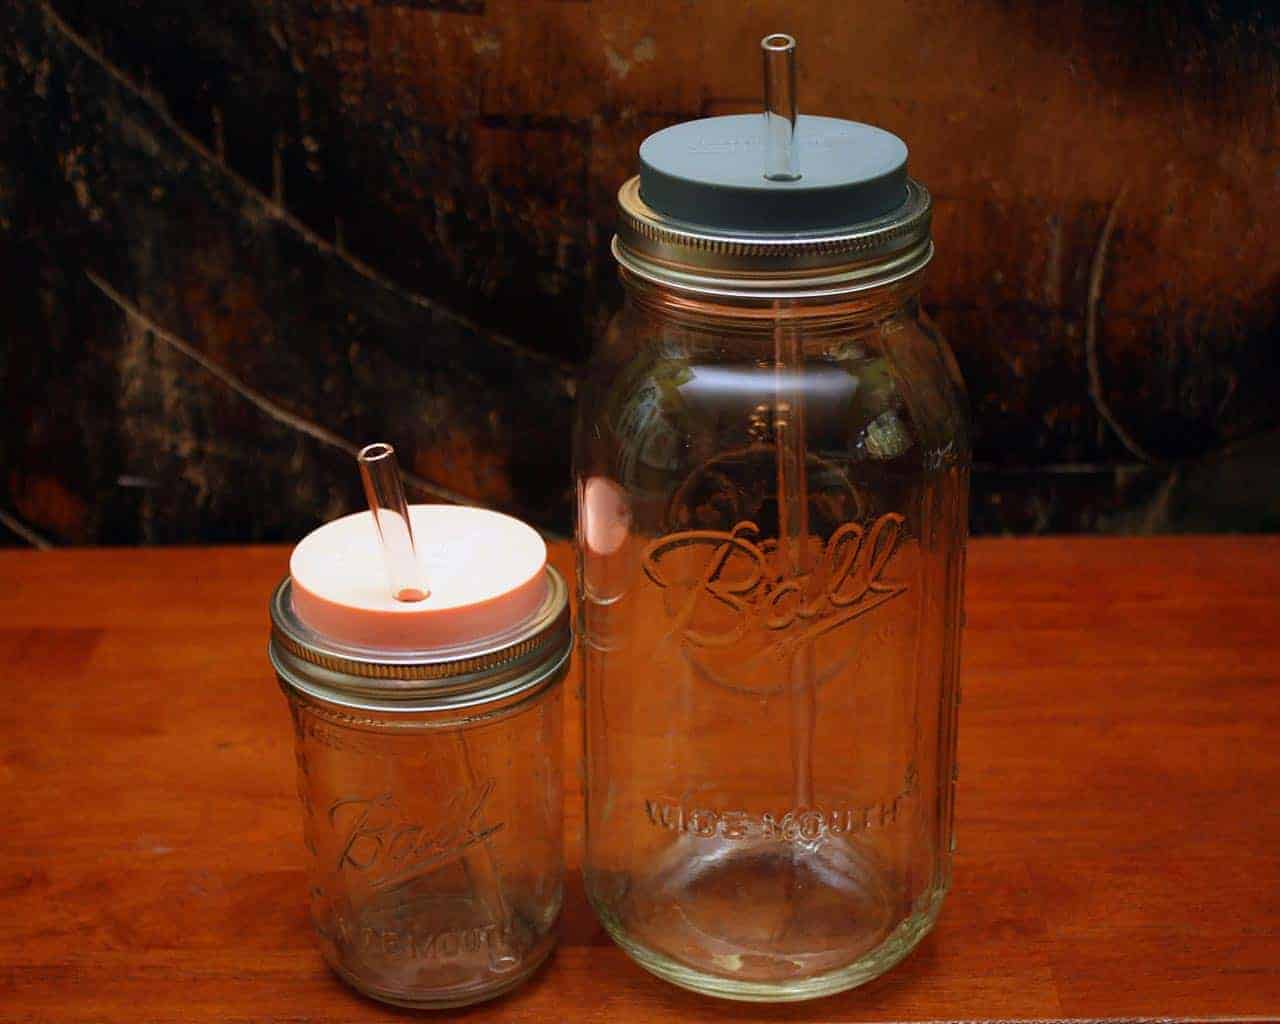 Medium Bent Glass Straw for Pint Mason Jars